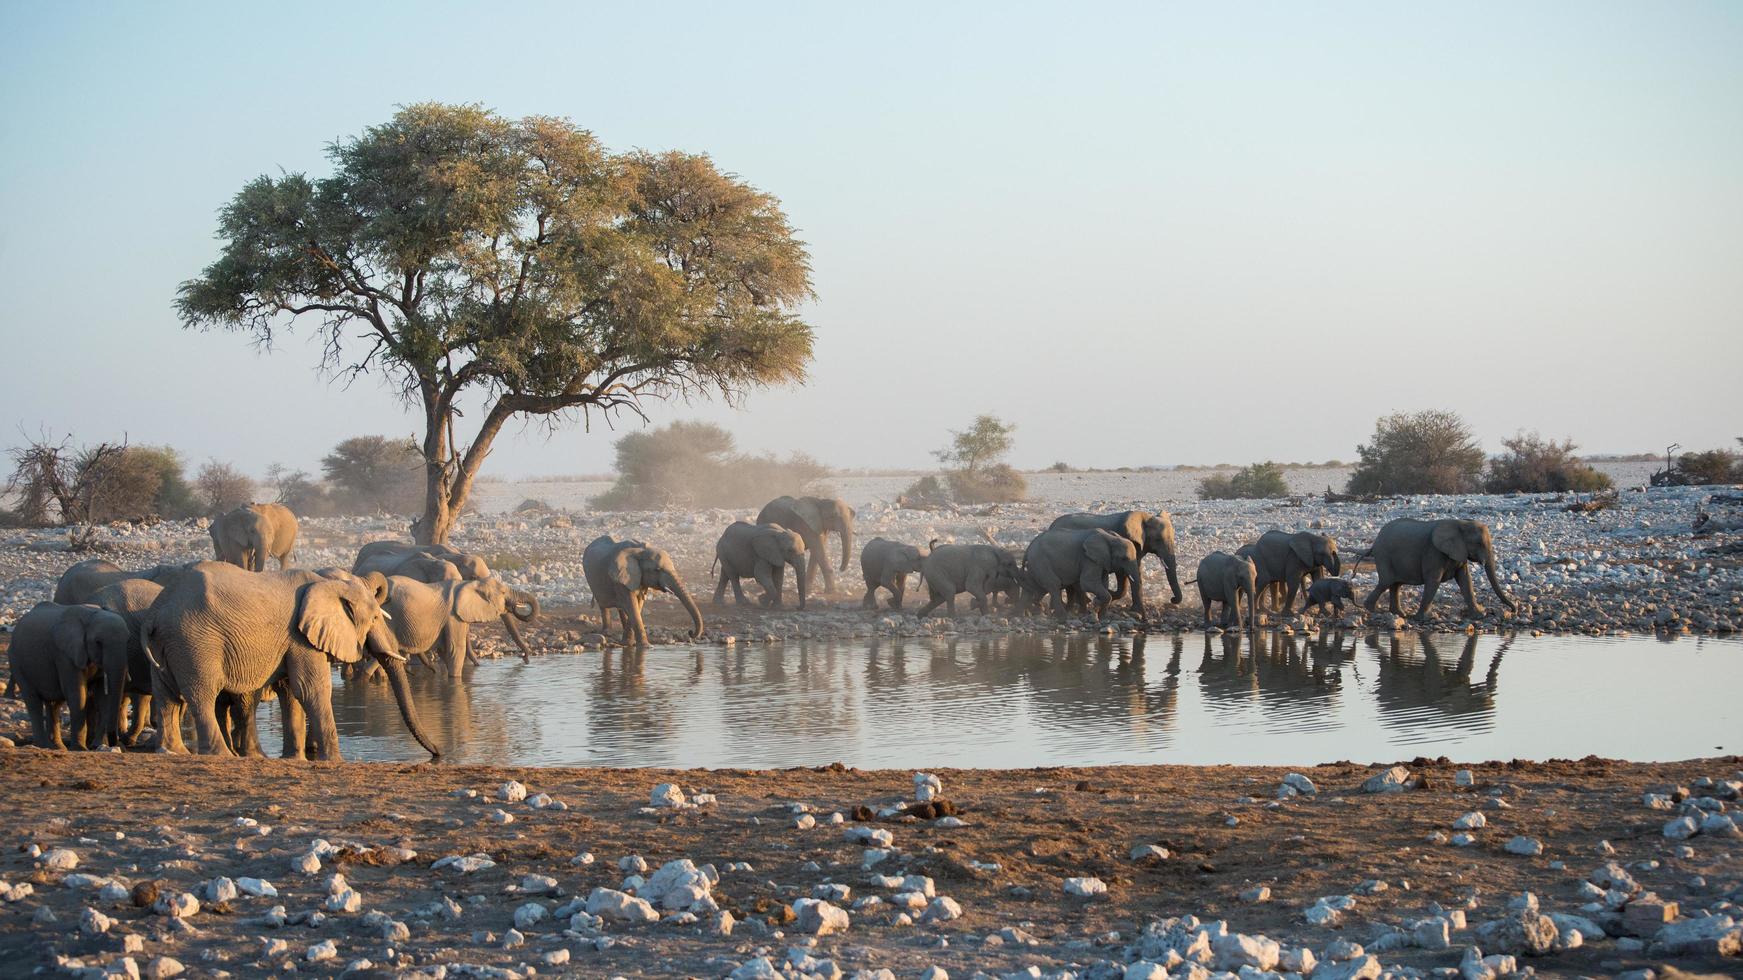 hermoso paisaje de namibia. grupo de elefantes en un abrevadero. foto